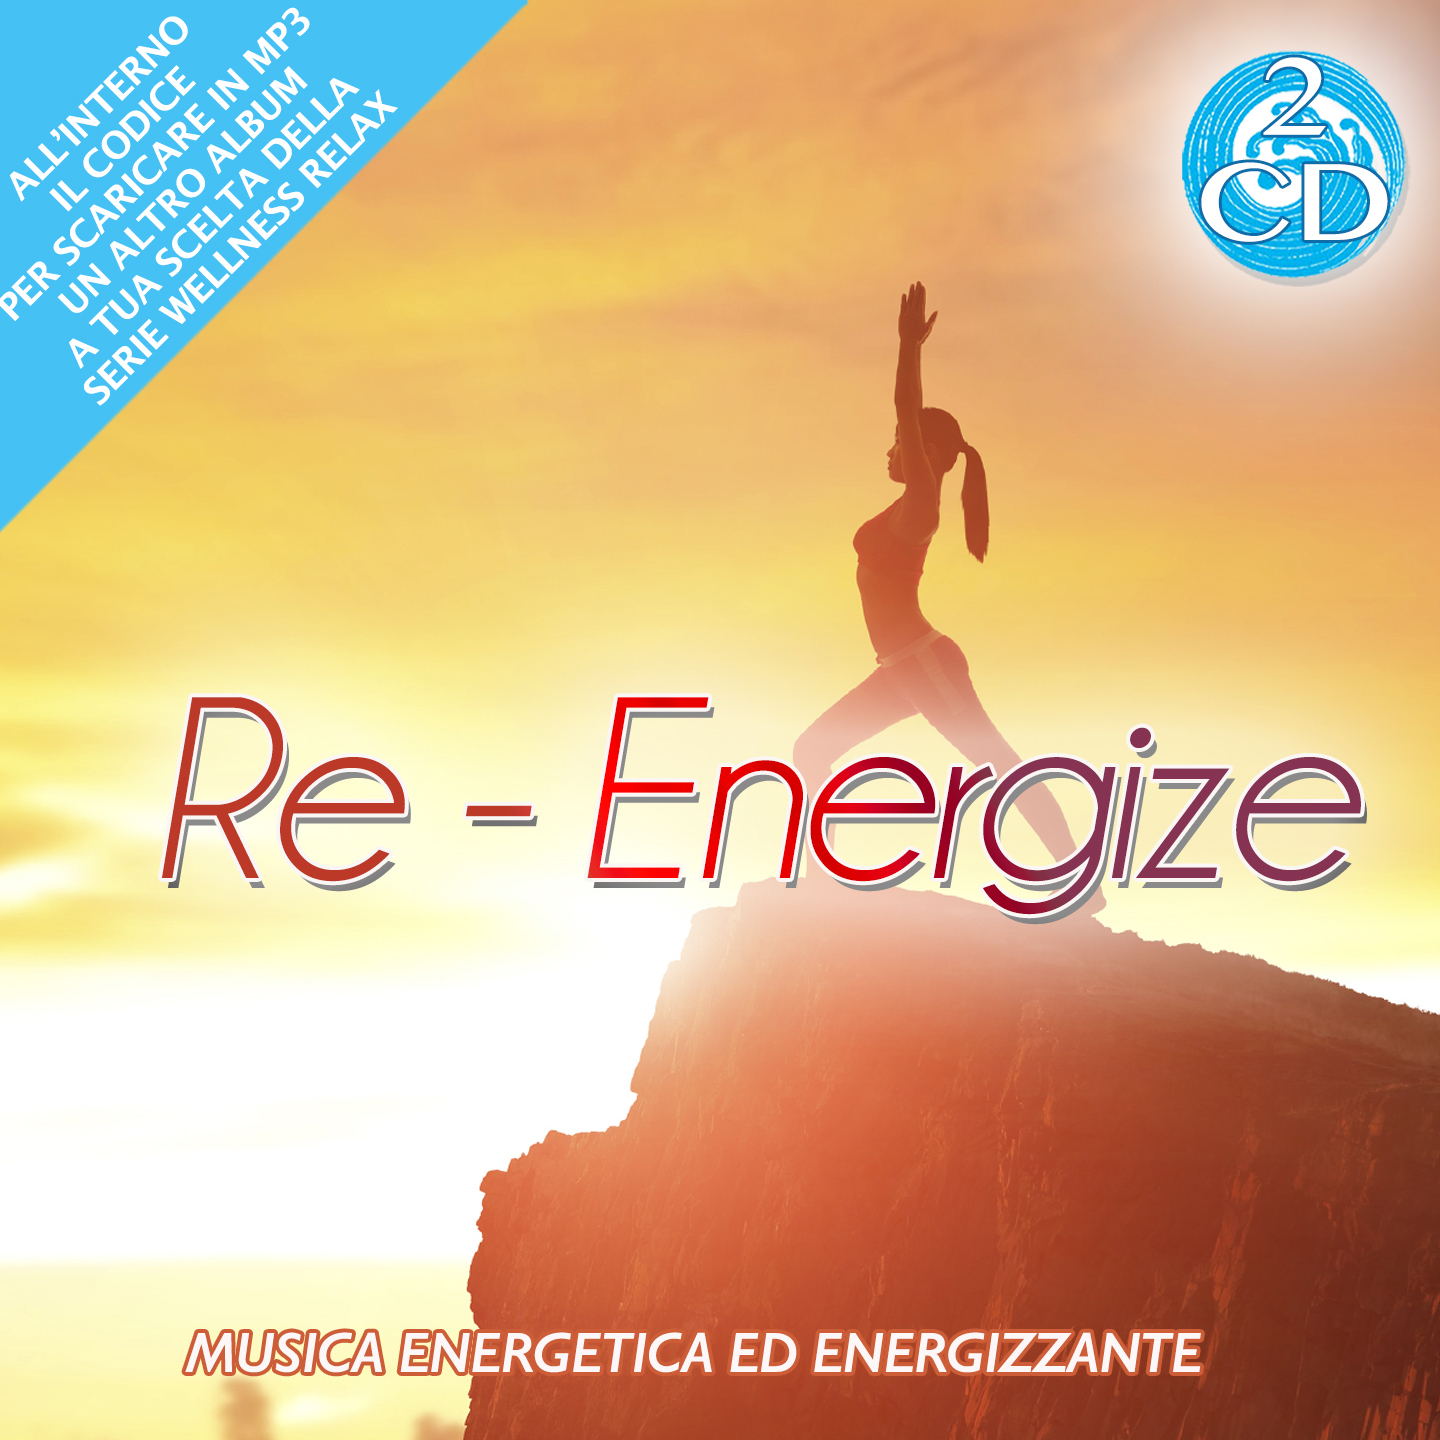 Re-Energize: Musica energetica ed energizzante